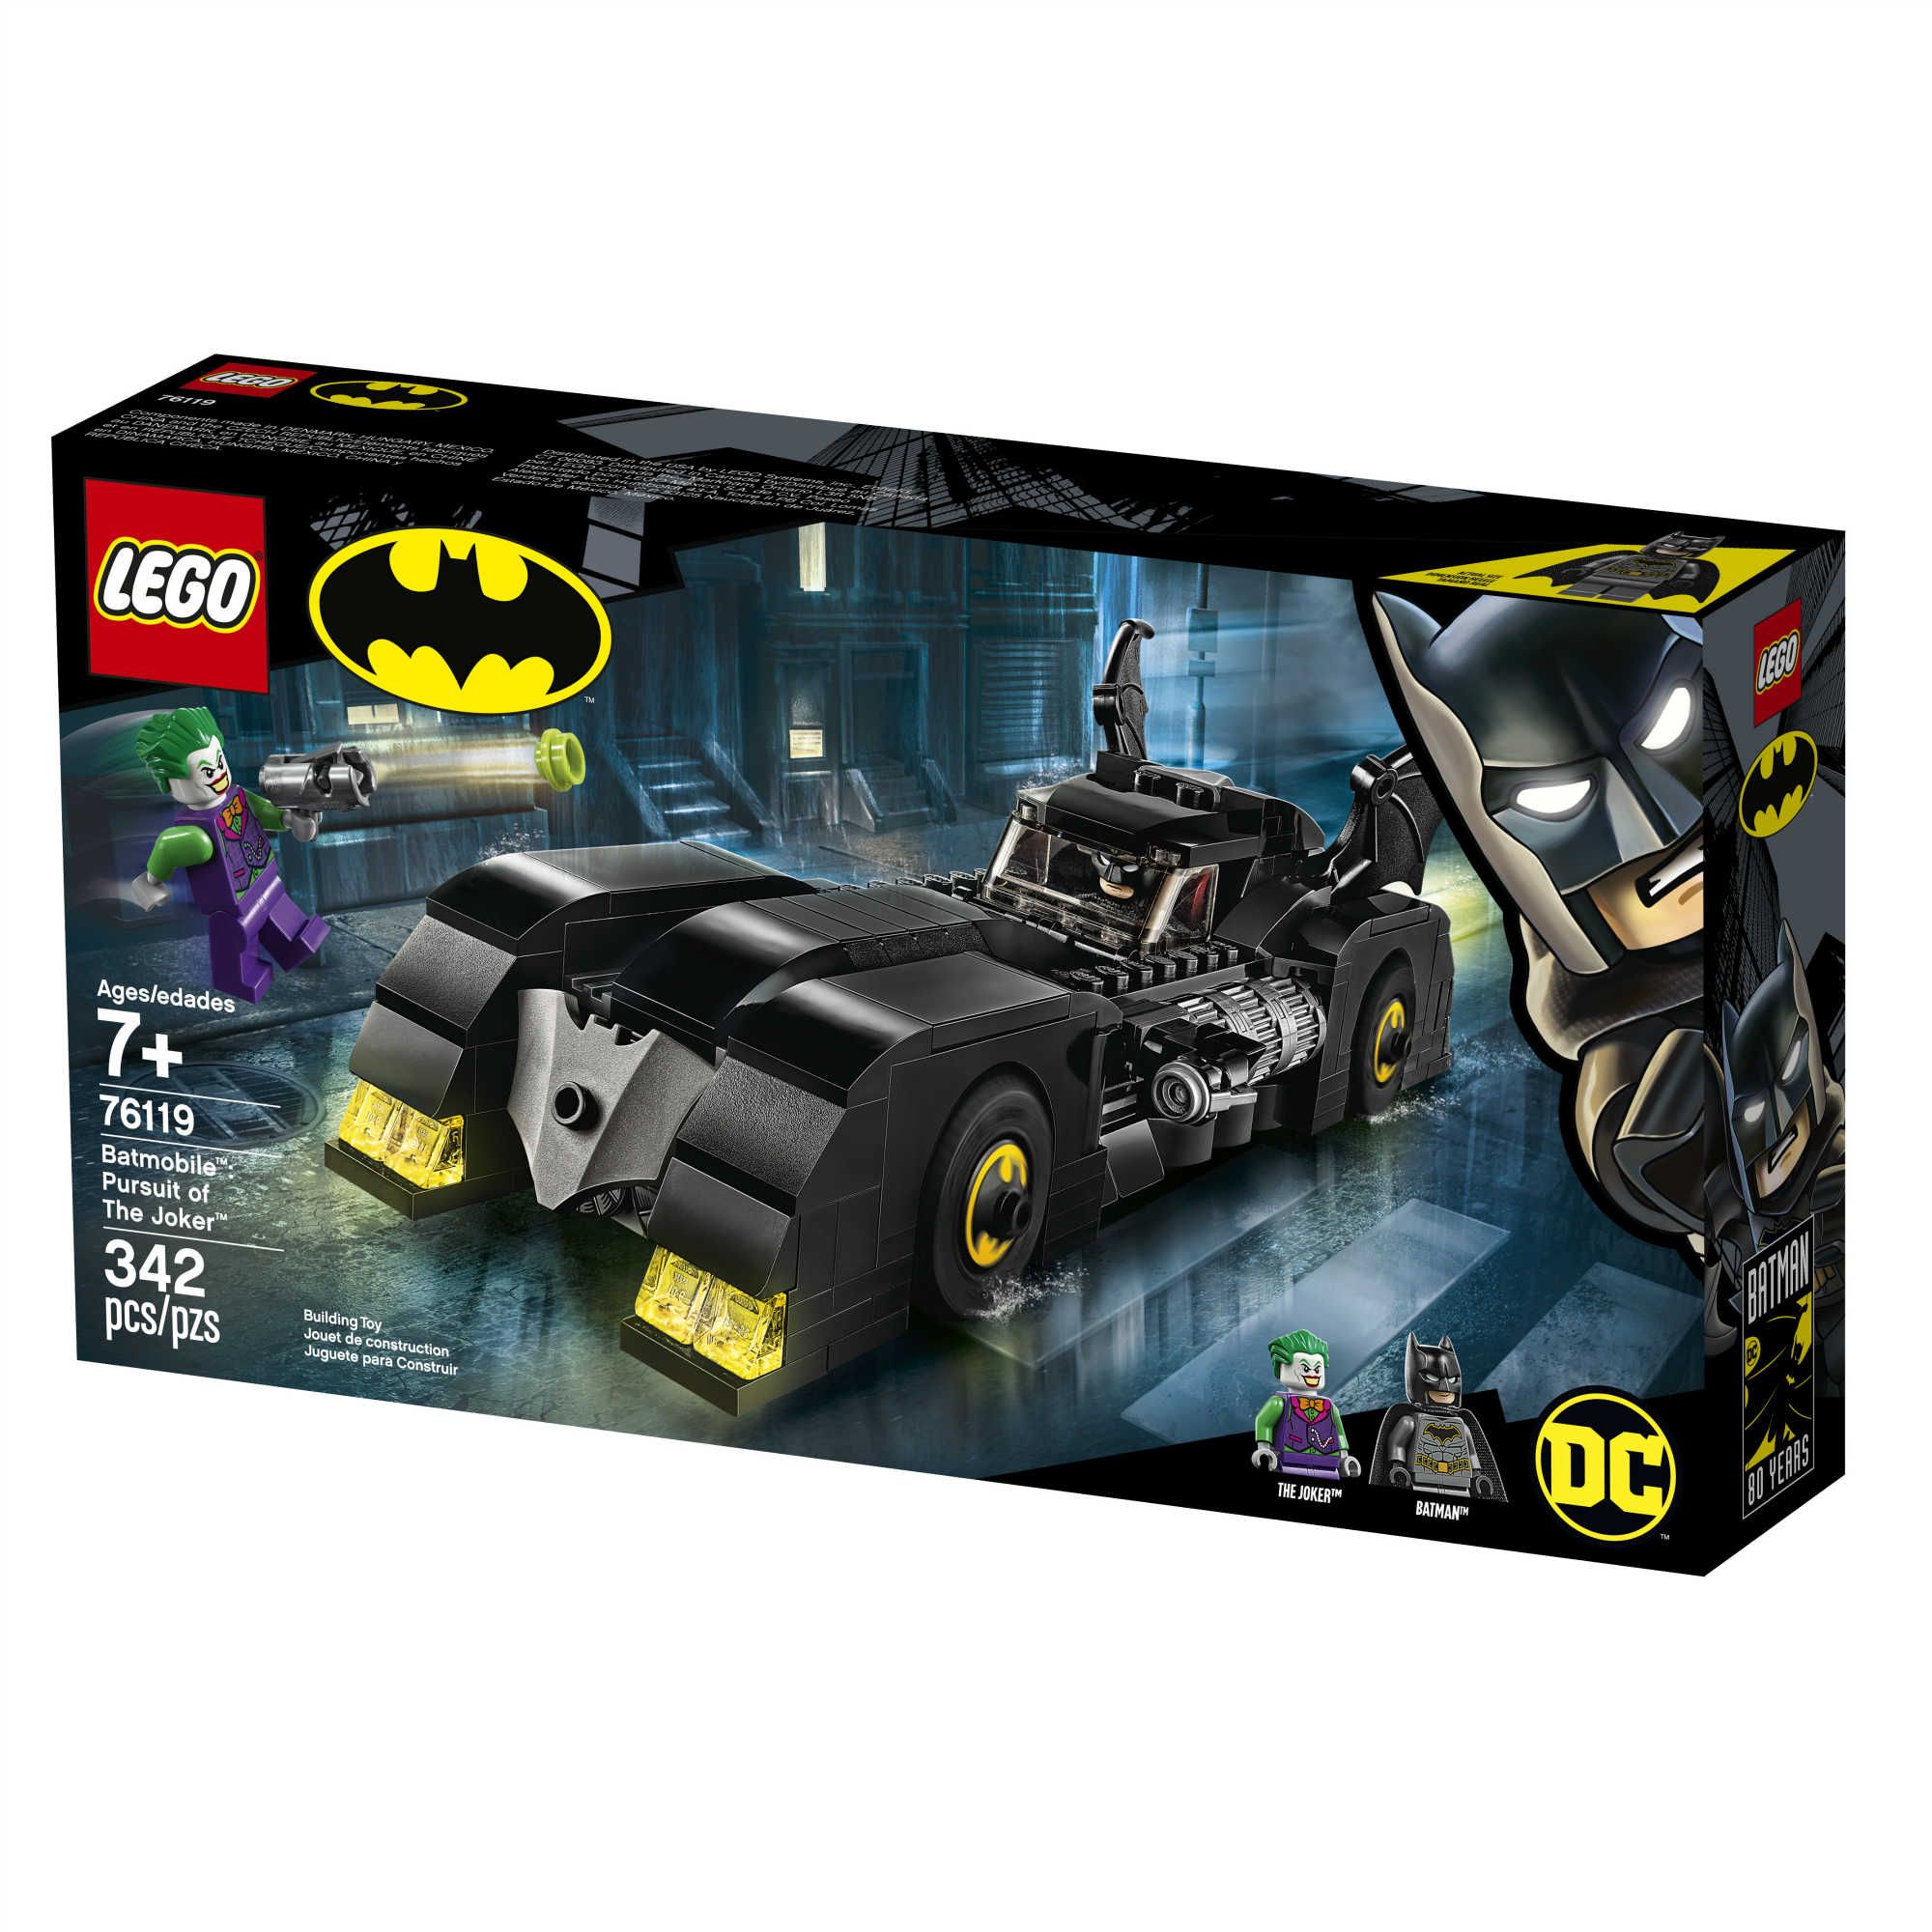 LEGO Batman Sets Batmobile Pursuit of The Joker Box